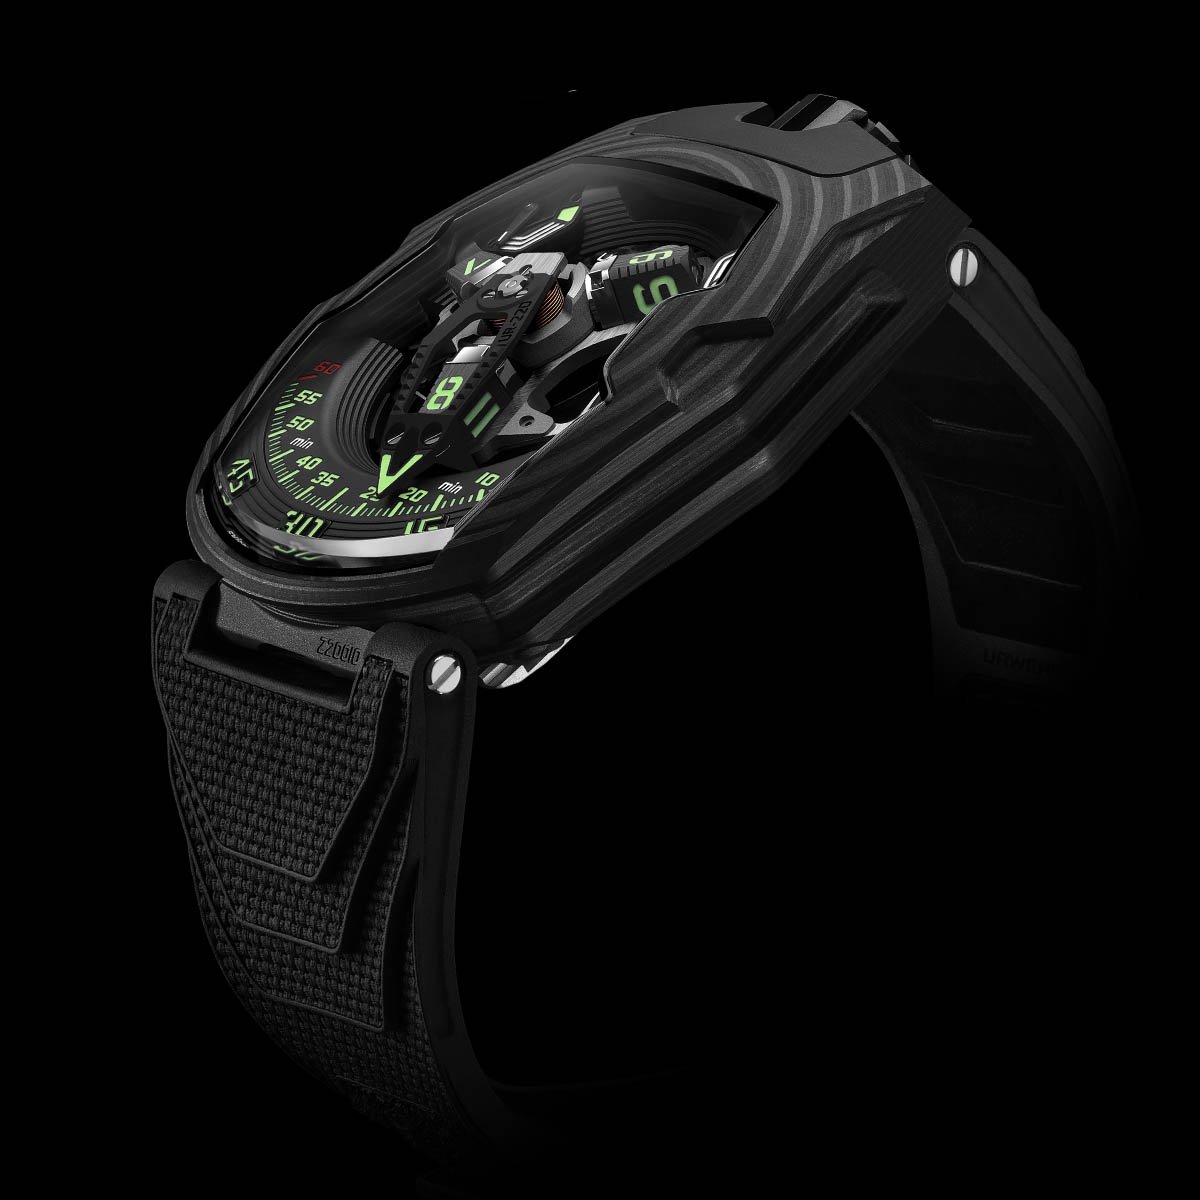 Swiss timepieces luxury watch UR-220